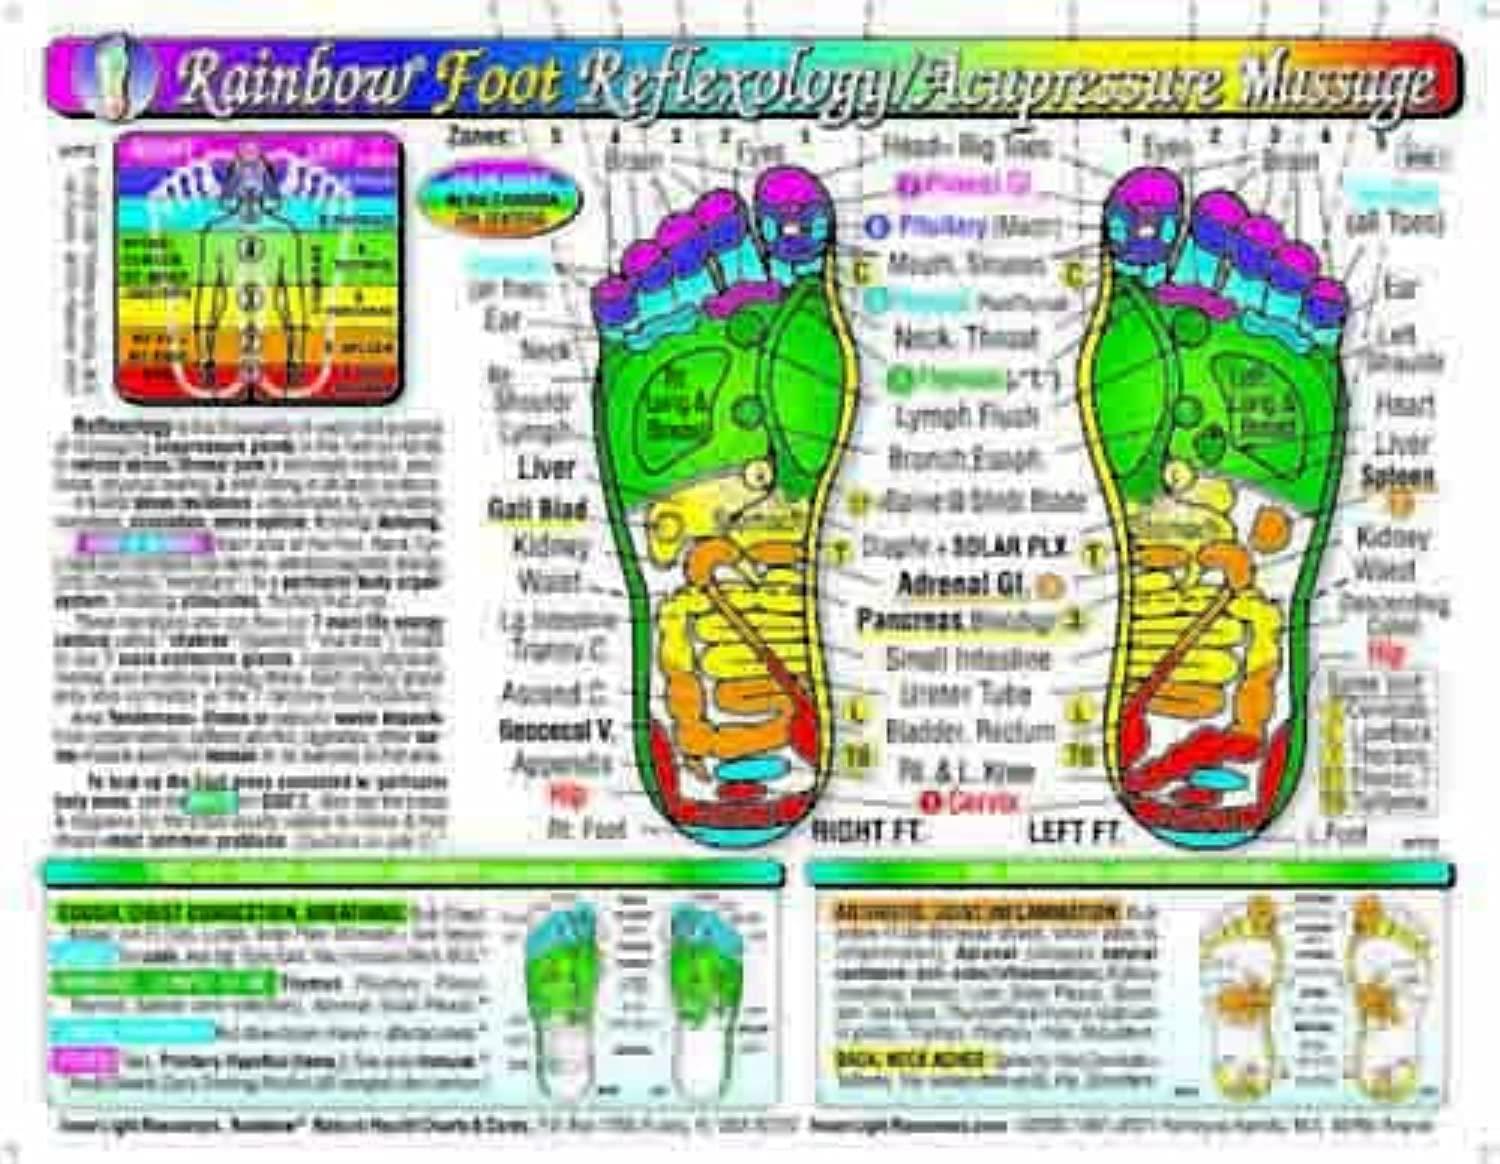 rainbow foot reflexology acupressure massage chart cards yshkeyna hamilla, jan zupcsics, yshheyna hamilla ma